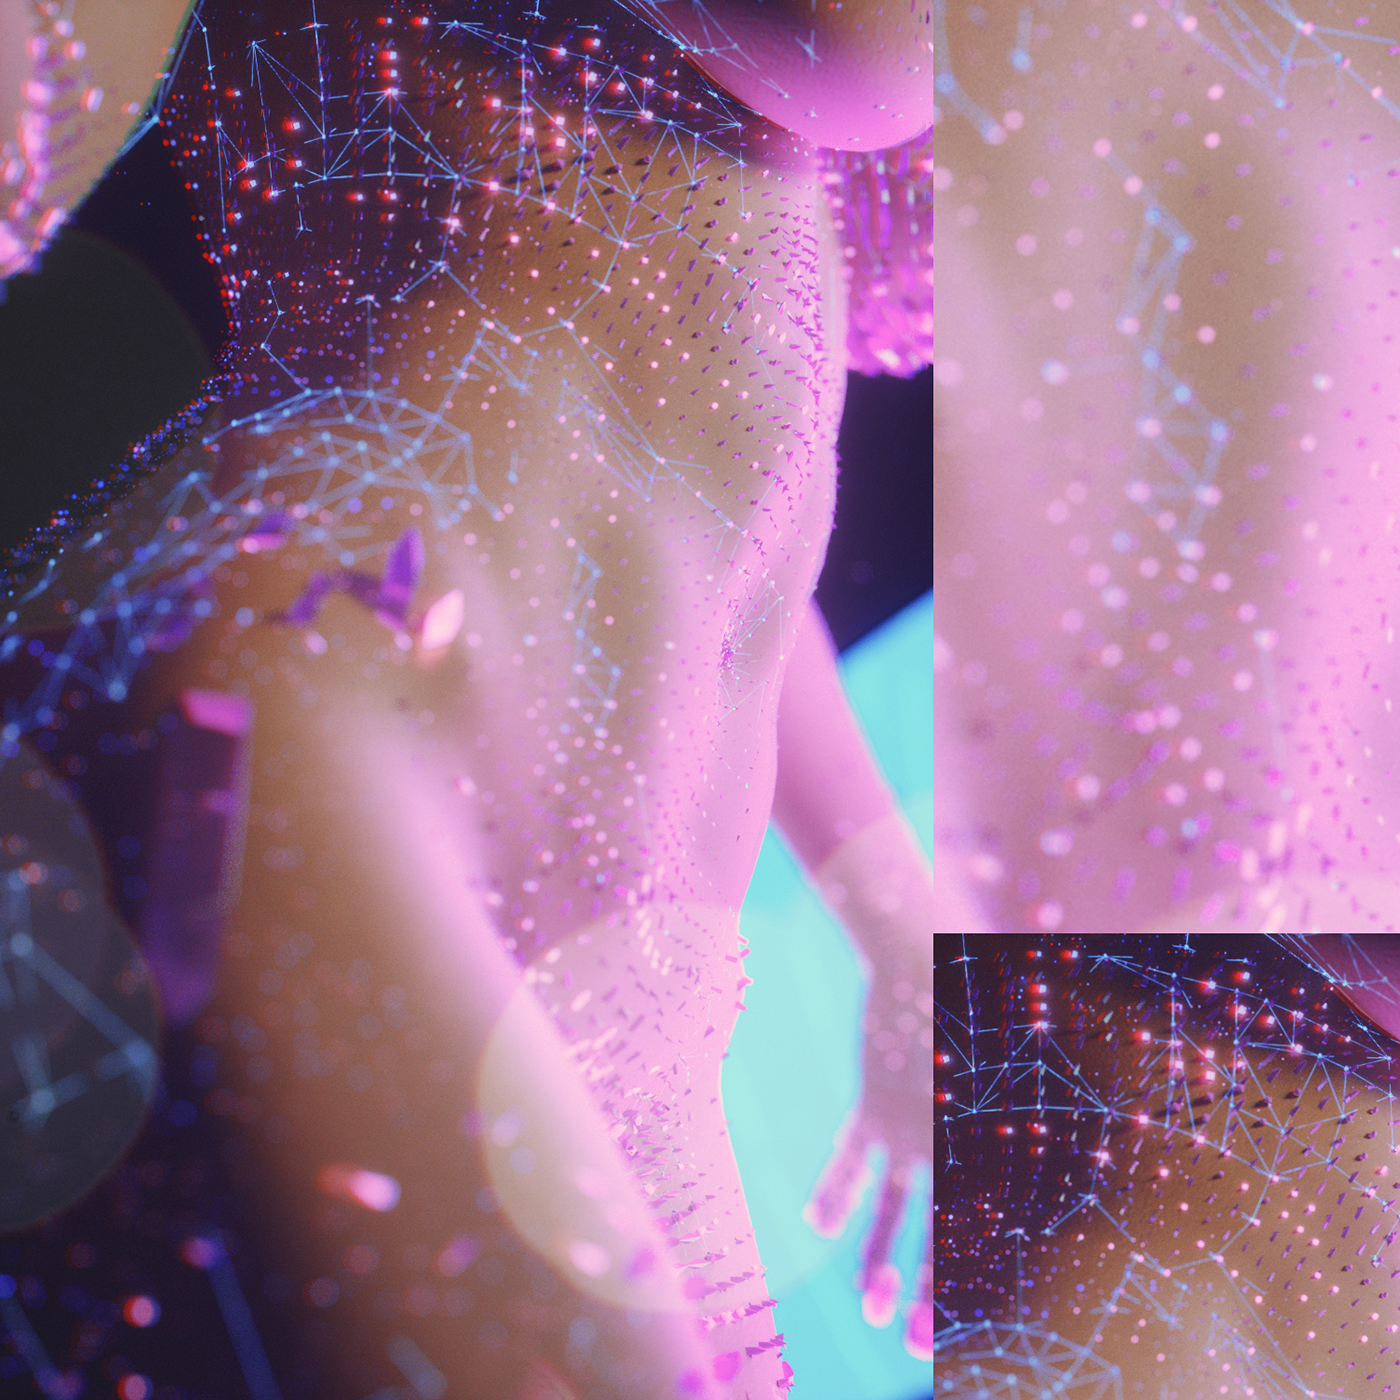 3D Render cinema4d octane girl body neon retrowave future cyber